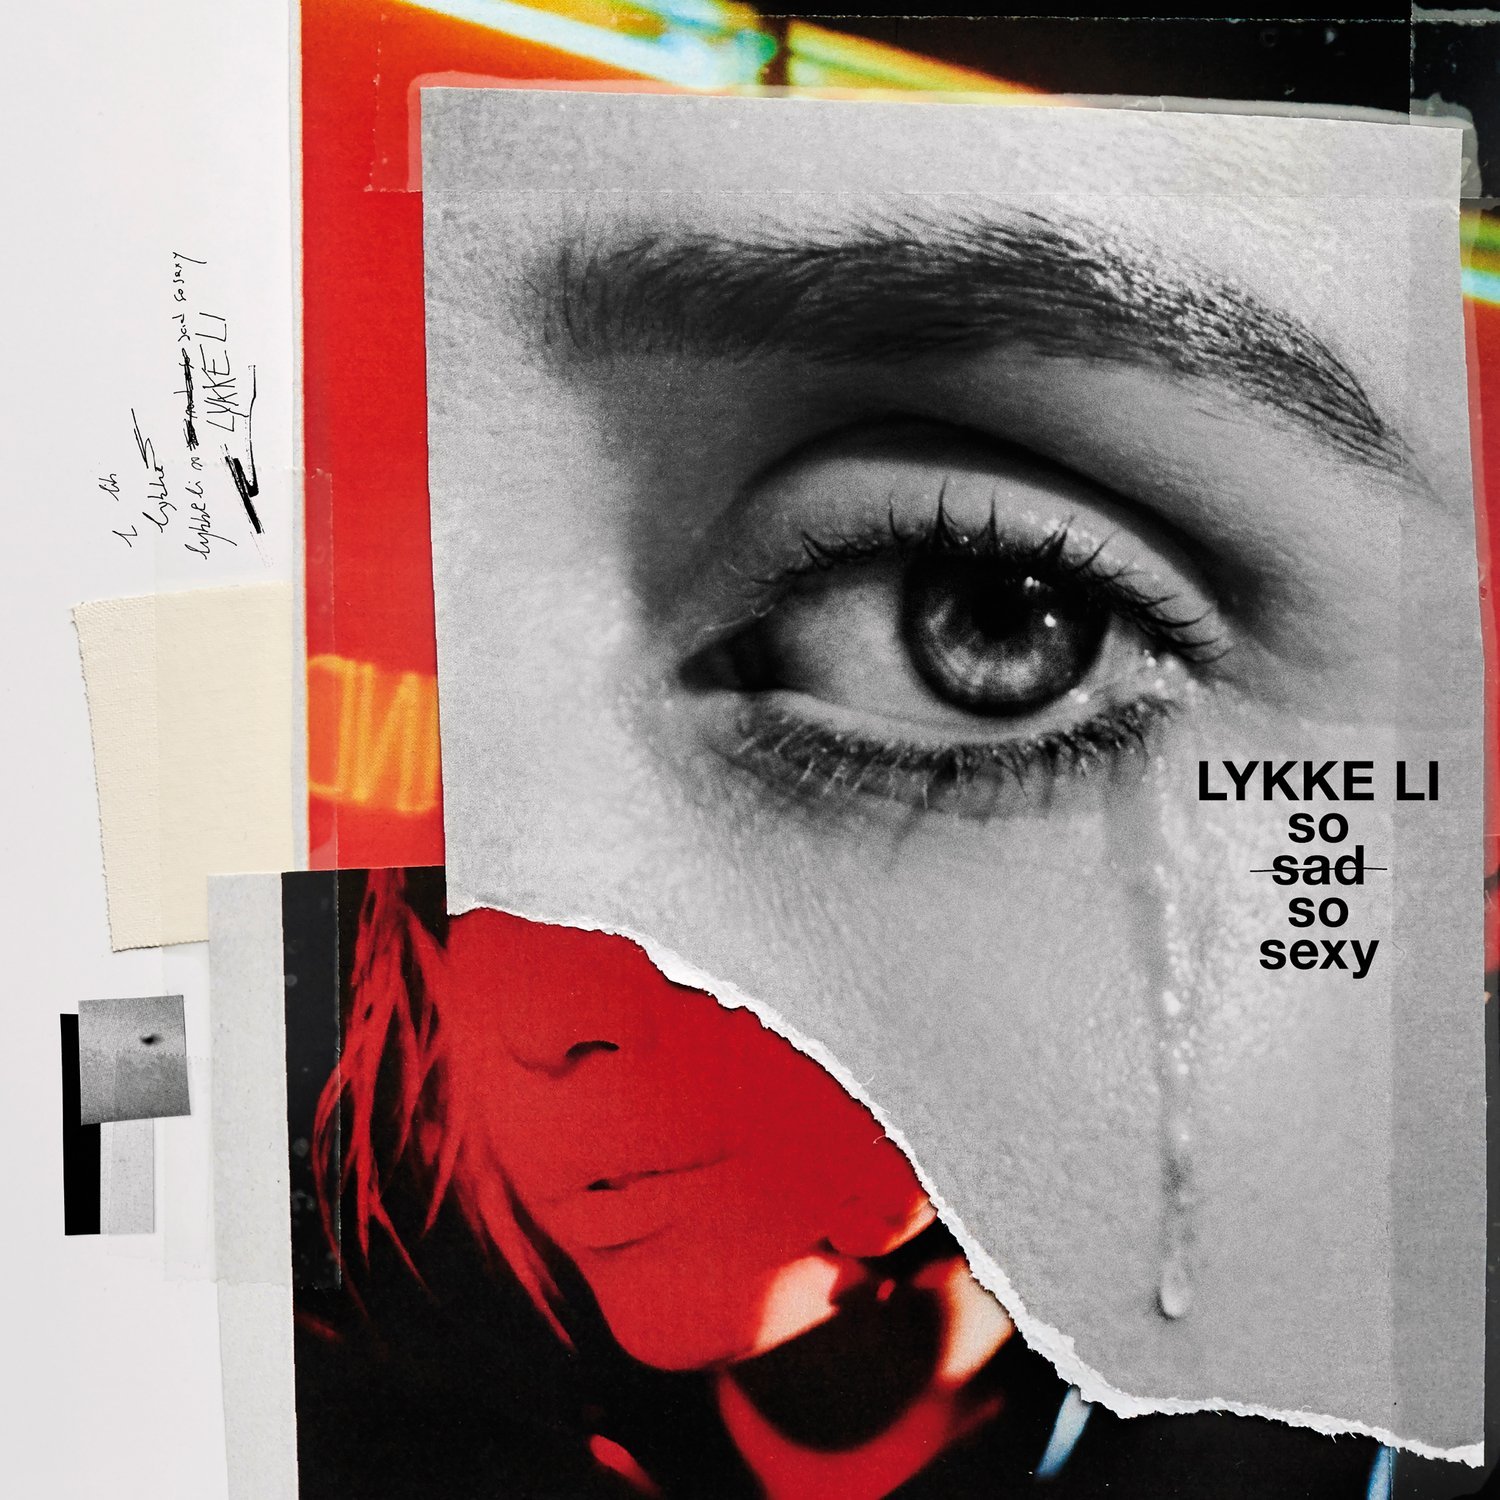 Mark Ronson - "Late Night Feelings" ft. Lykke Li